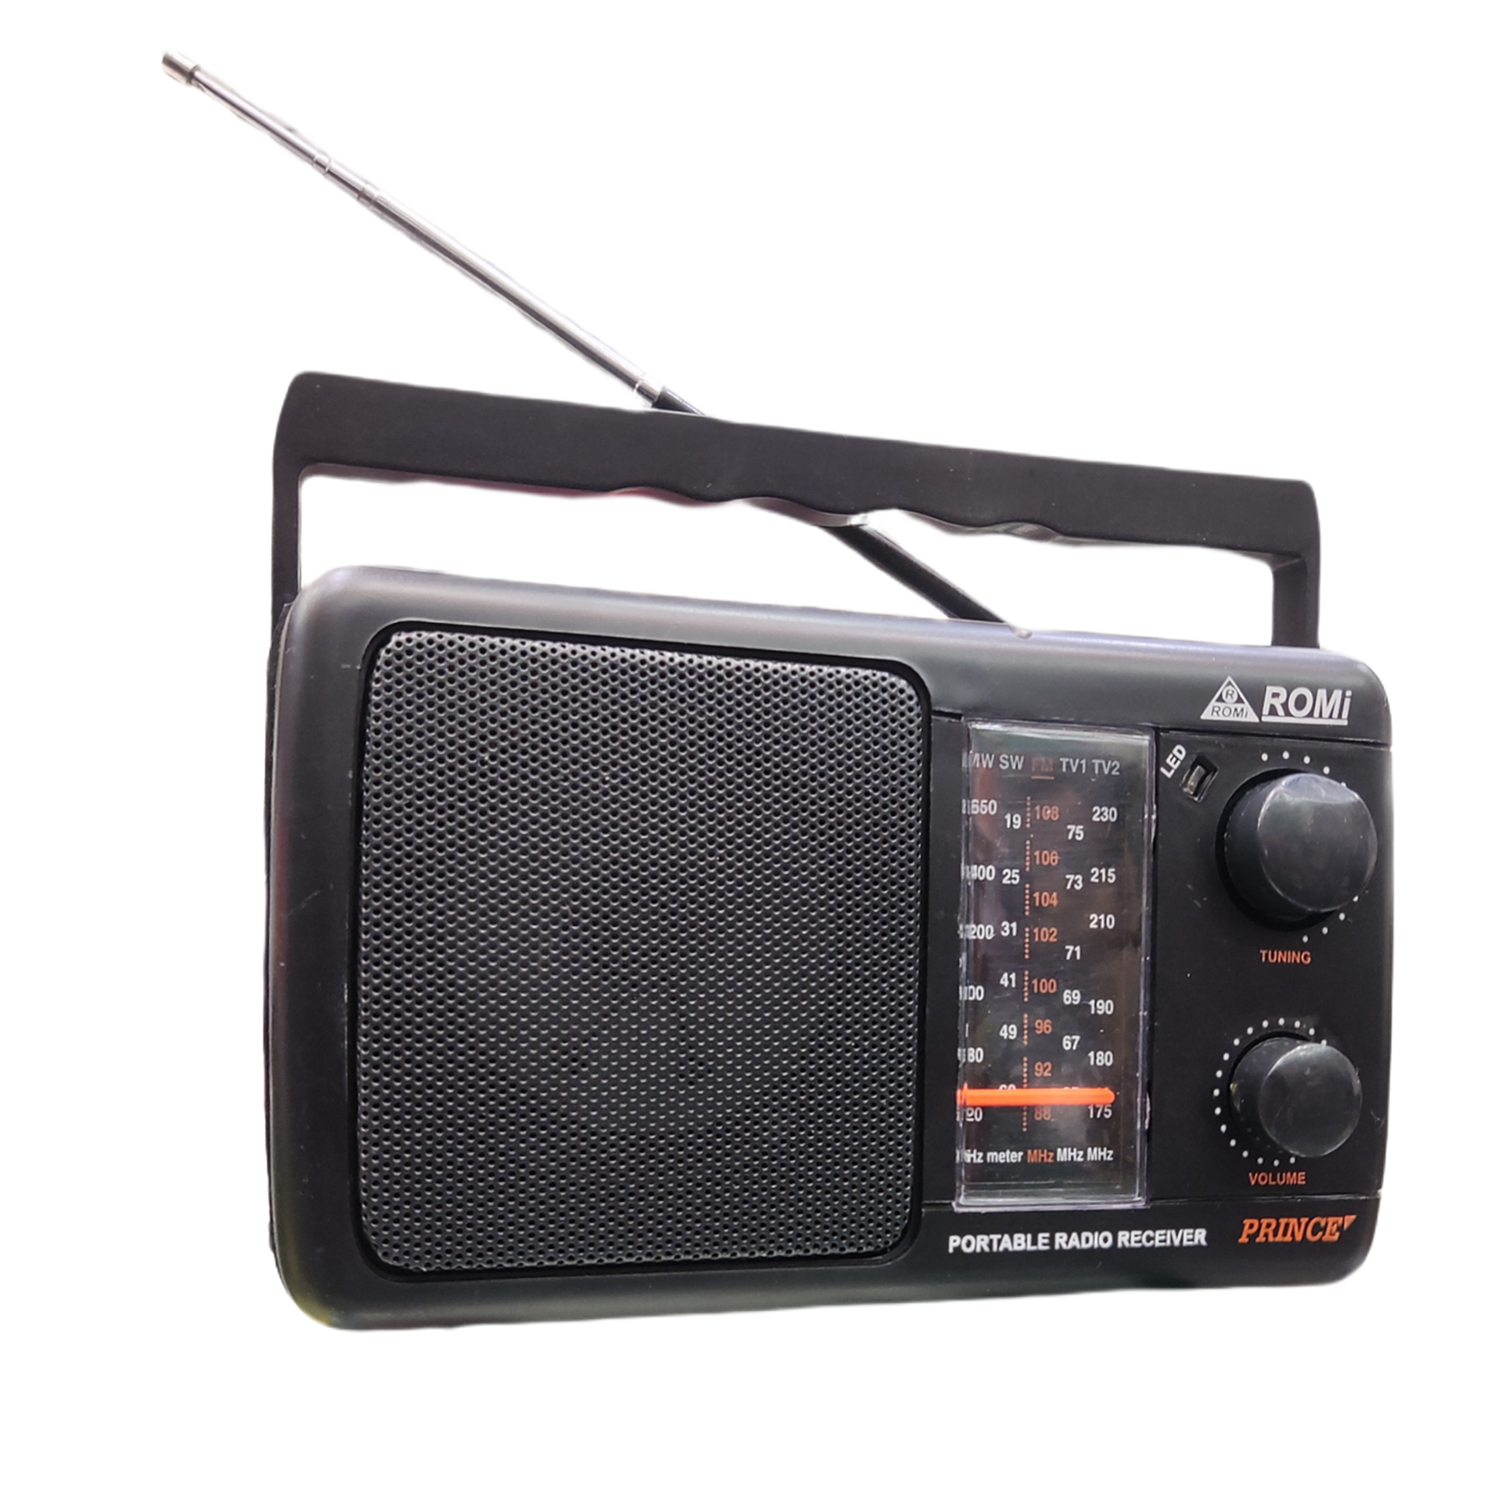 ROMi DL 225 FM TV Radio | Two Cell Portable Radio (Black)